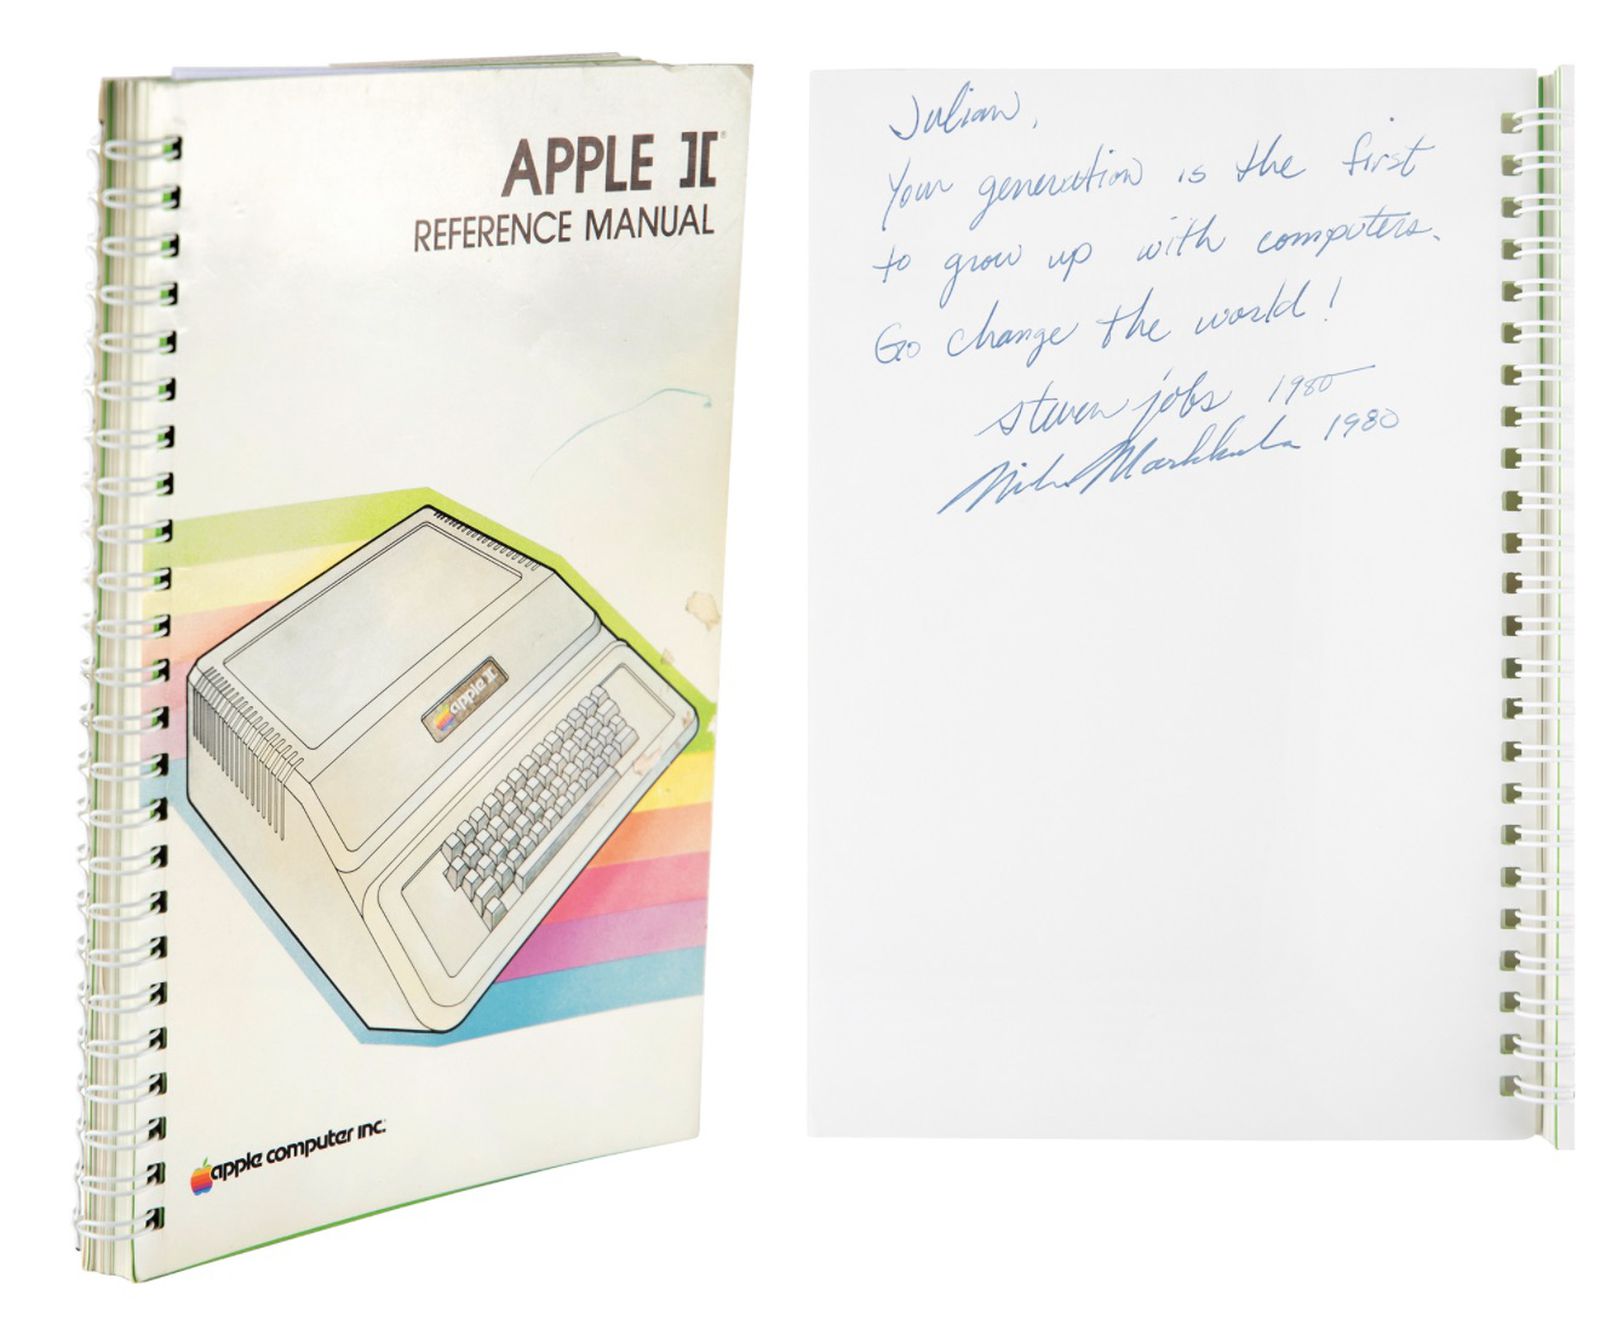 Apple II Manual Signed by Steve Jobs Sells for $787,483 - MacRumors